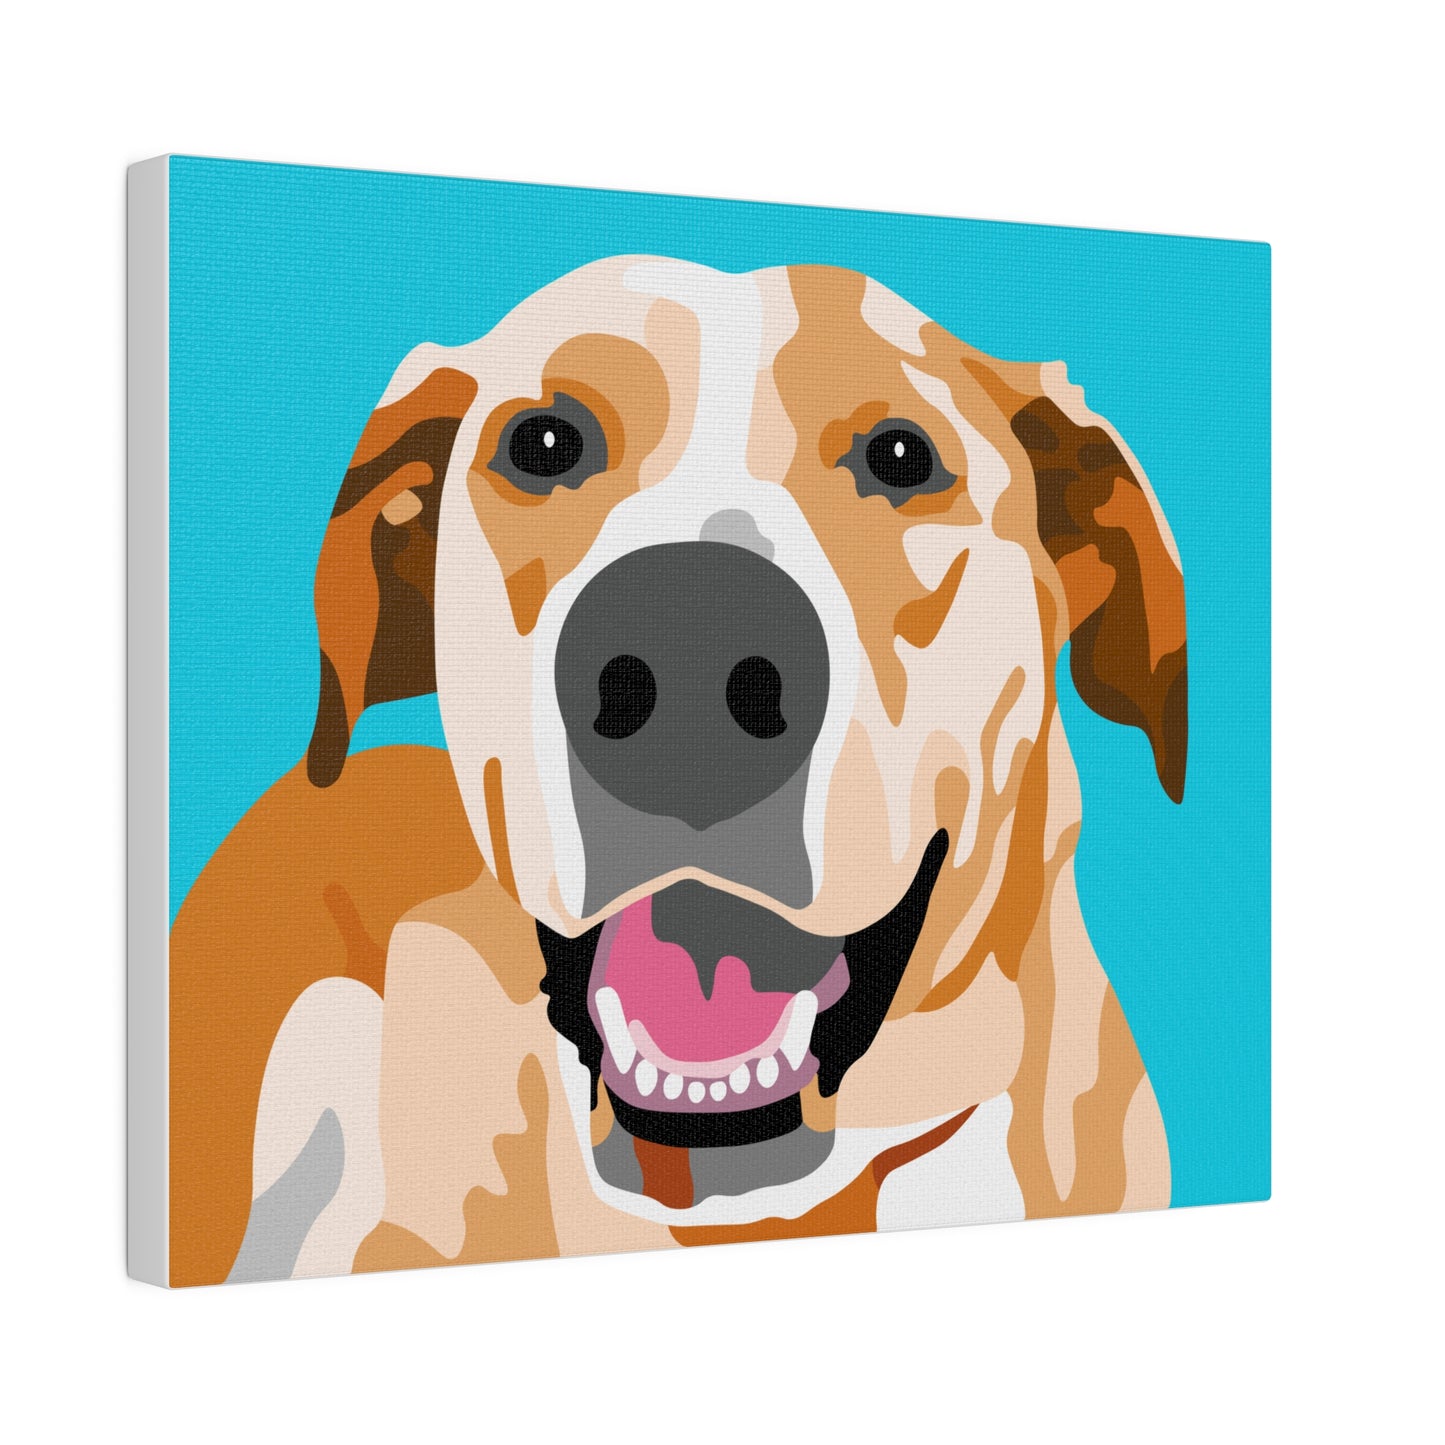 One Pet Portrait on Canvas | Caribbean Blue Background | Custom Hand-Drawn Pet Portrait in Cartoon-Realism Style